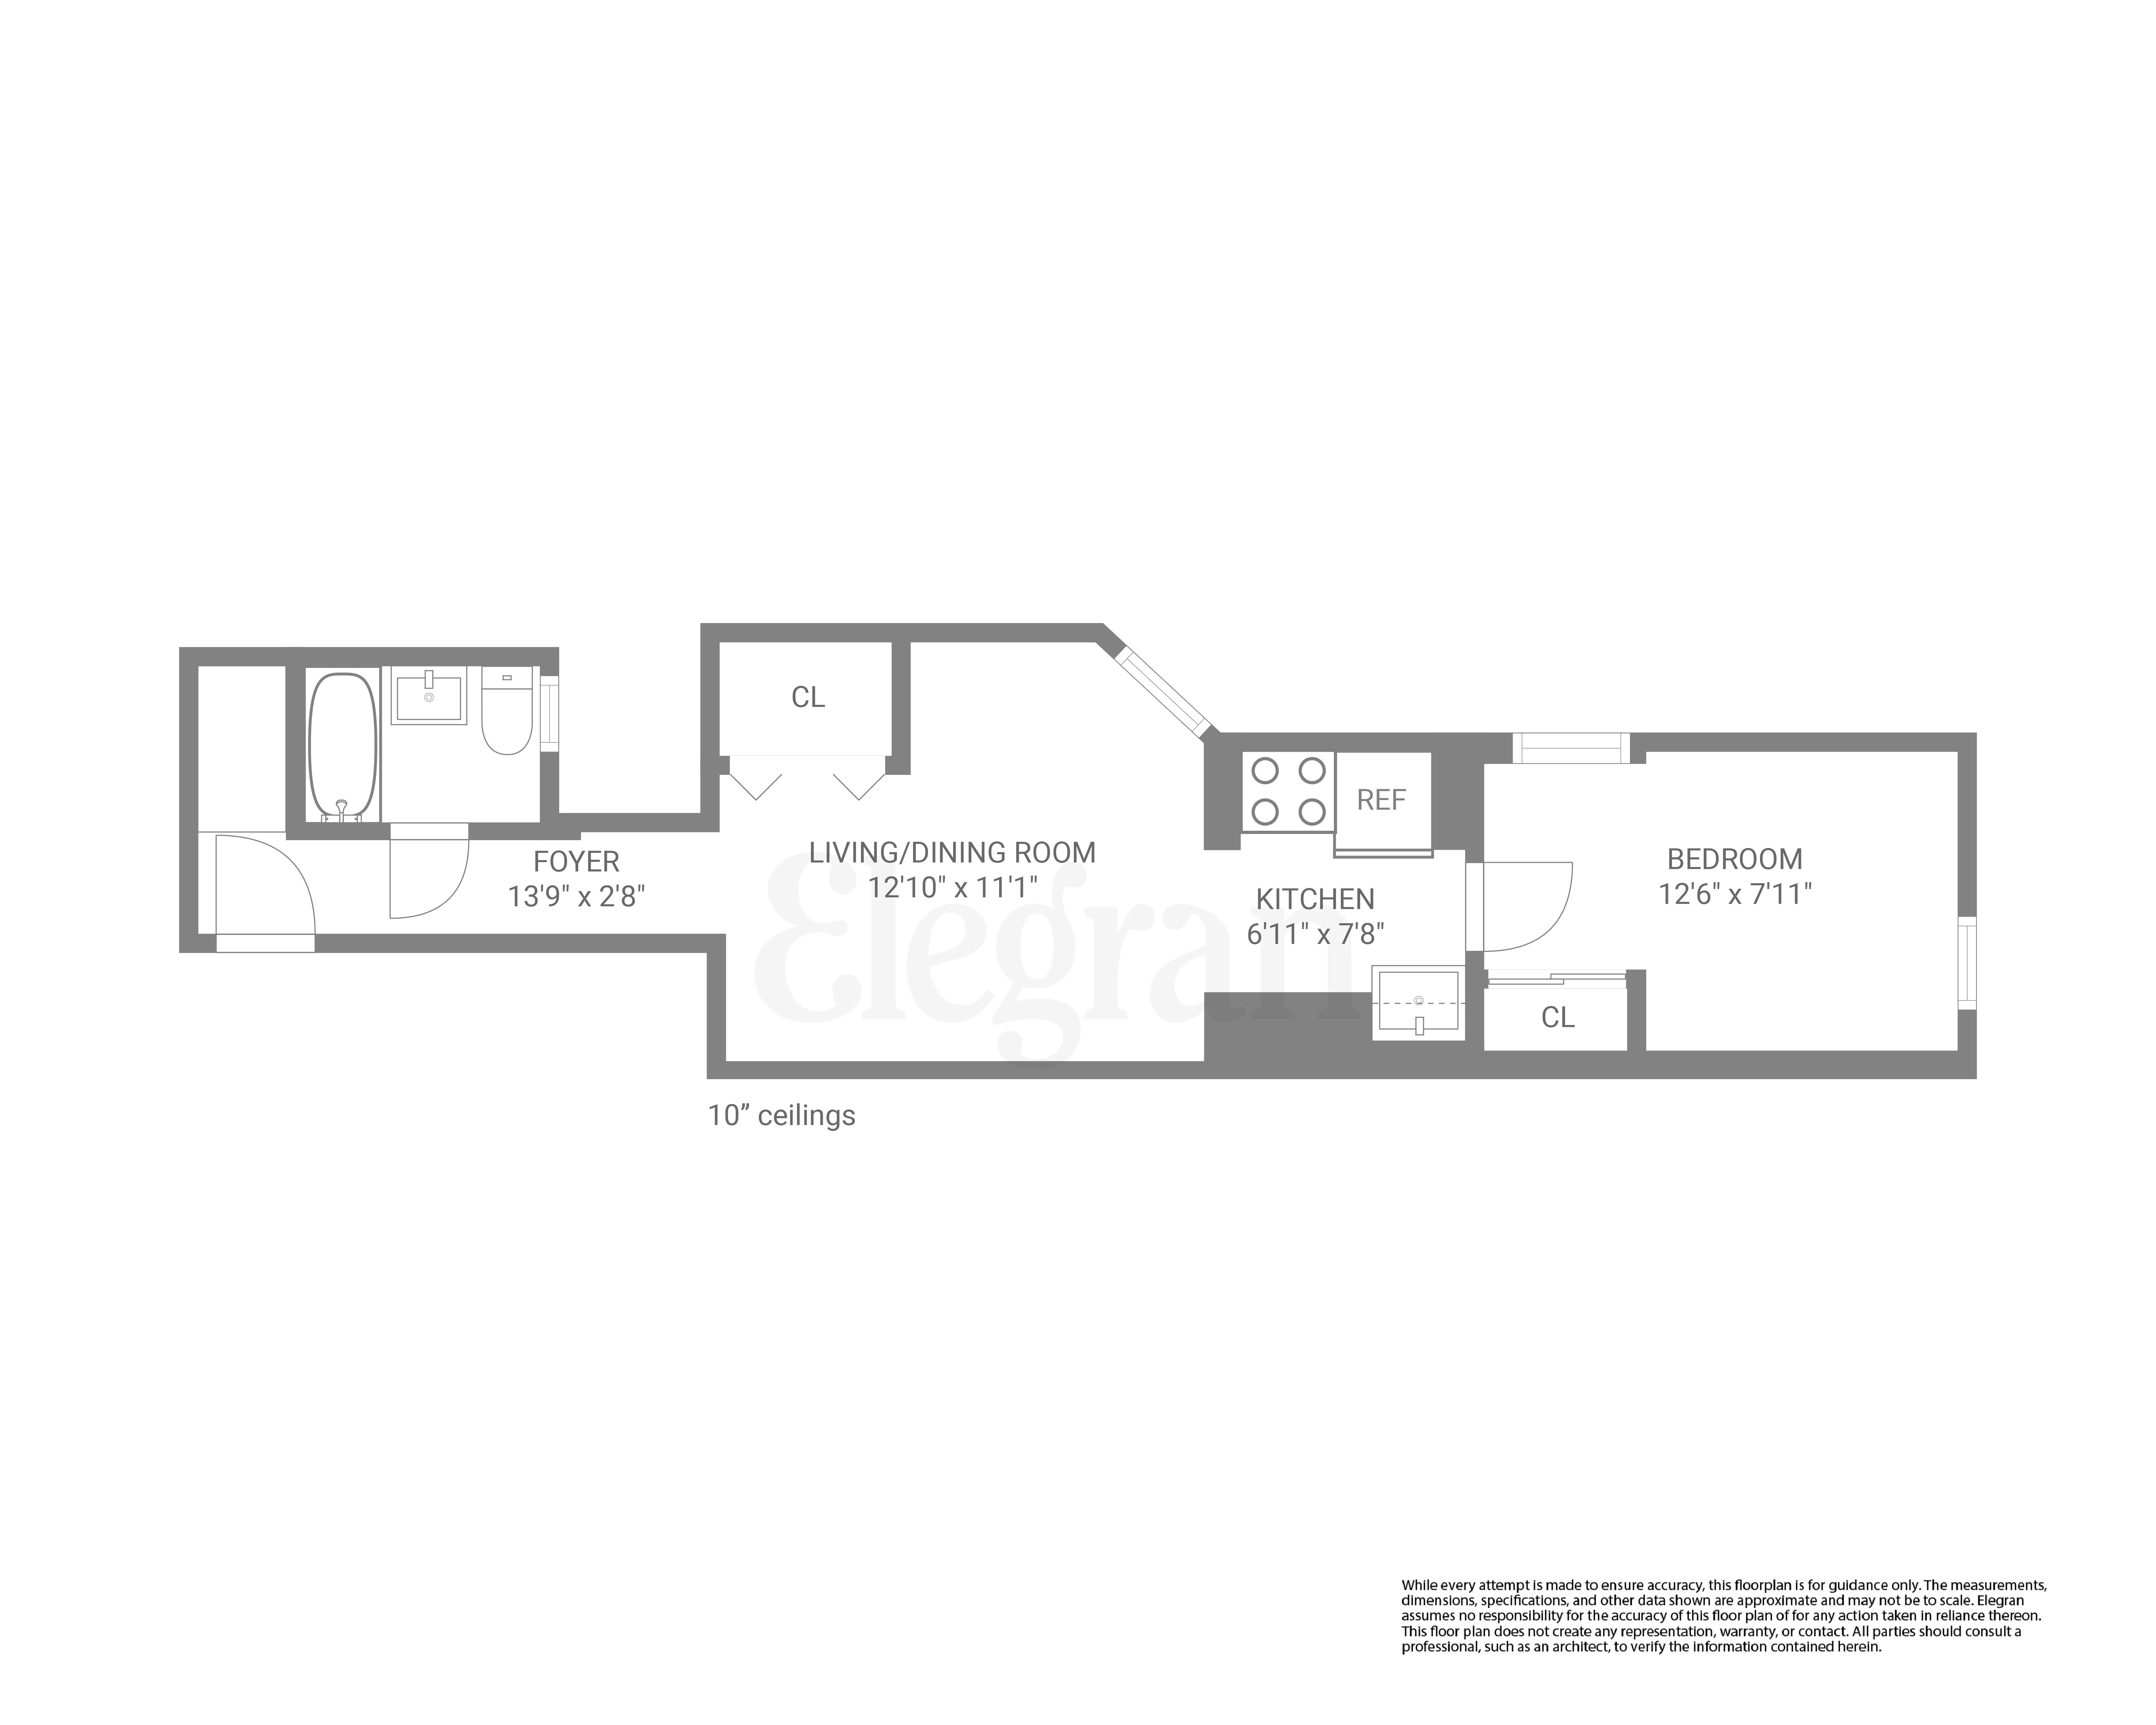 Floorplan for 264 West 22nd Street, 4